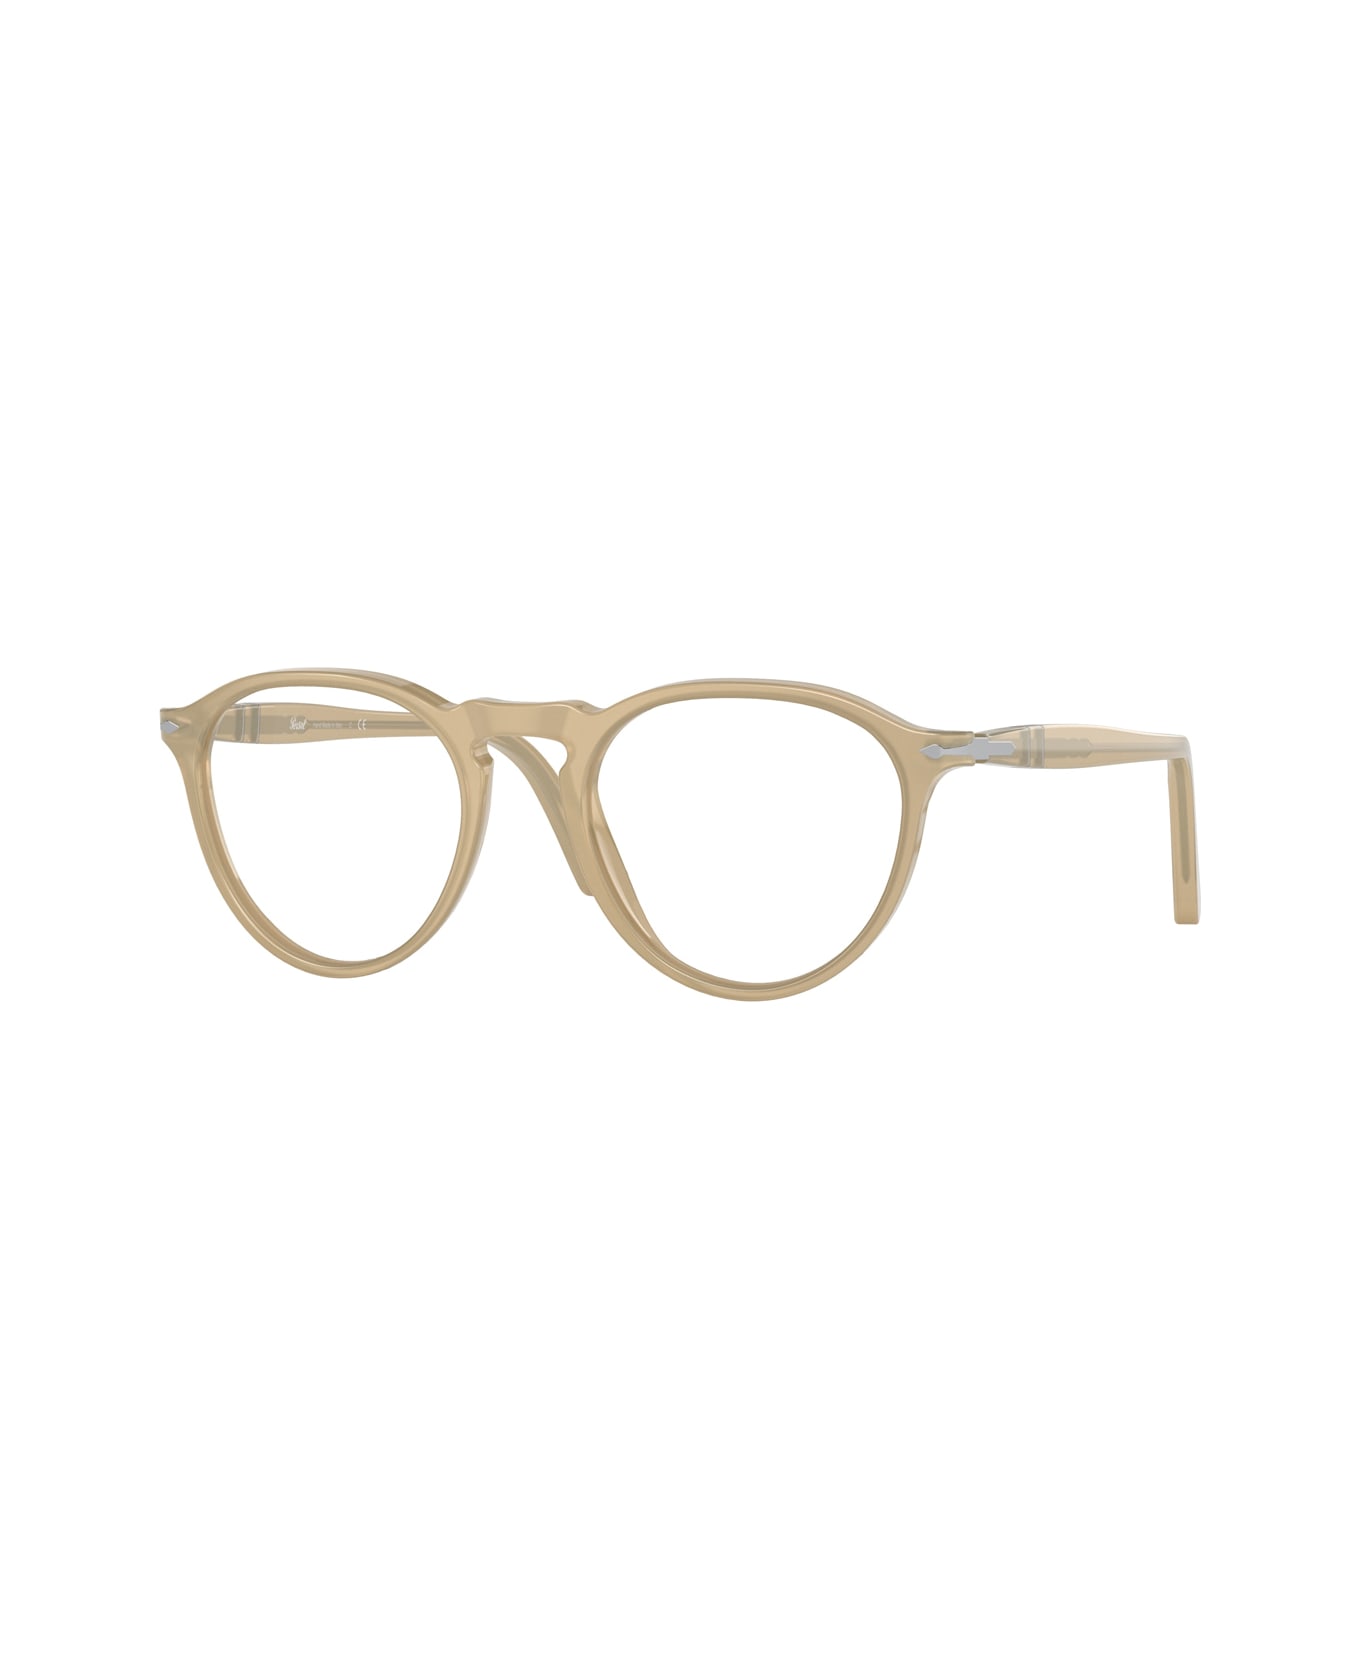 Persol Po3286v Glasses - Avorio アイウェア